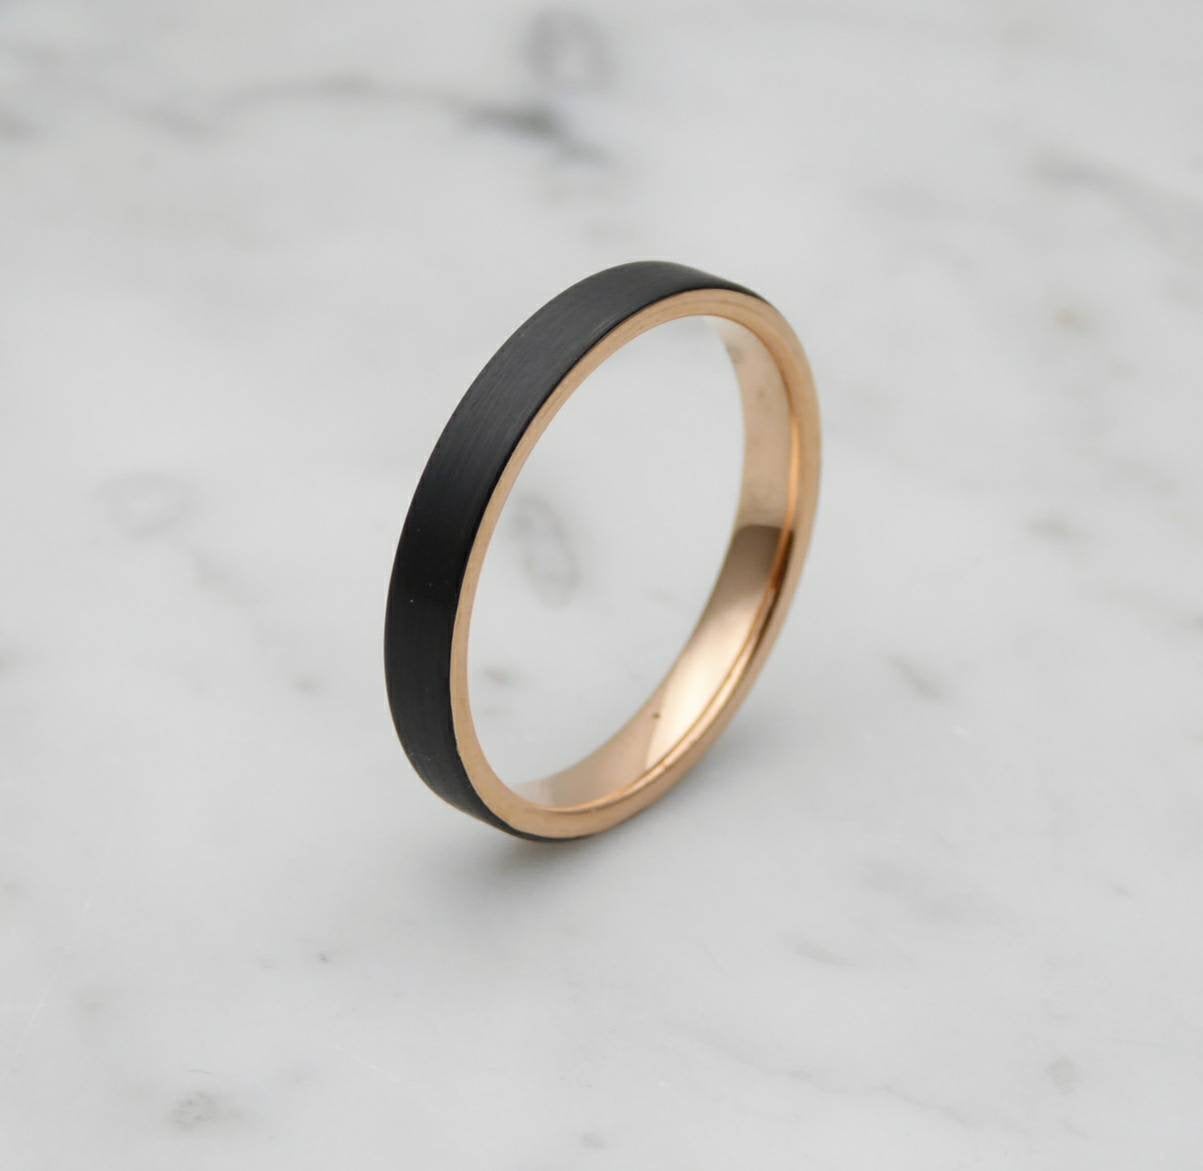 3mm Black Brushed titanium & 18k rose gold wedding ring band for men and women